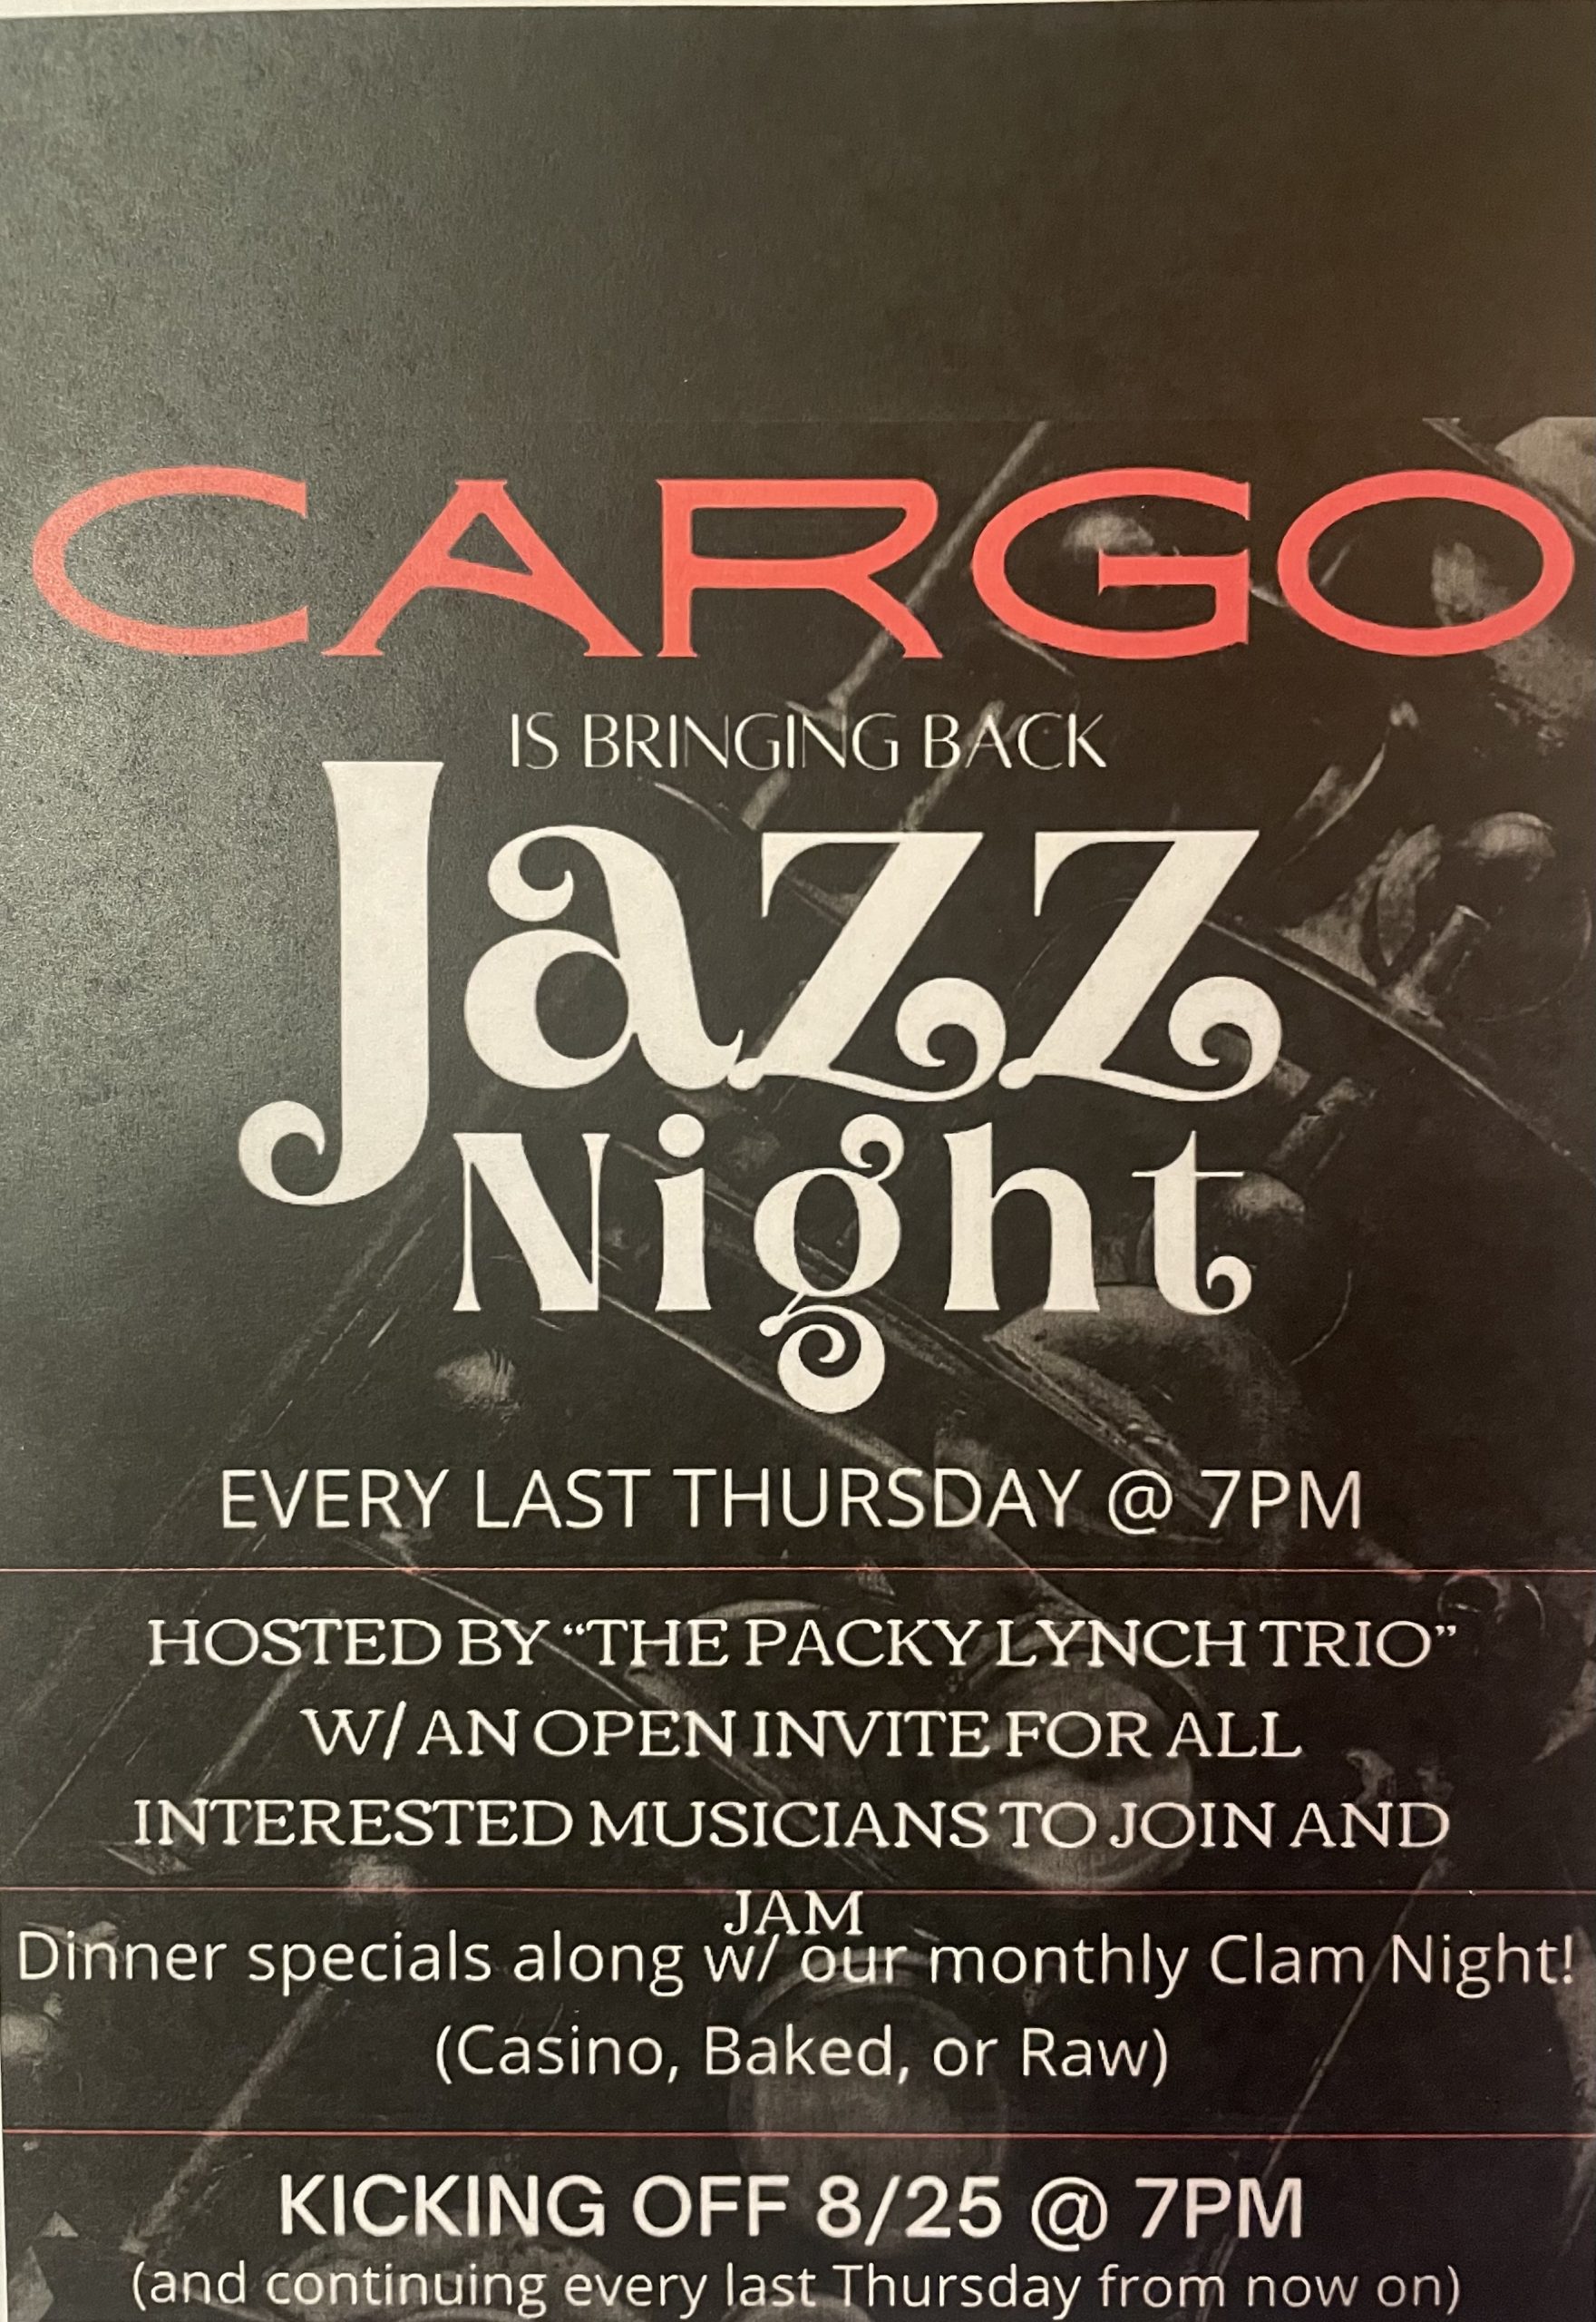 Cargo's Jazz Night